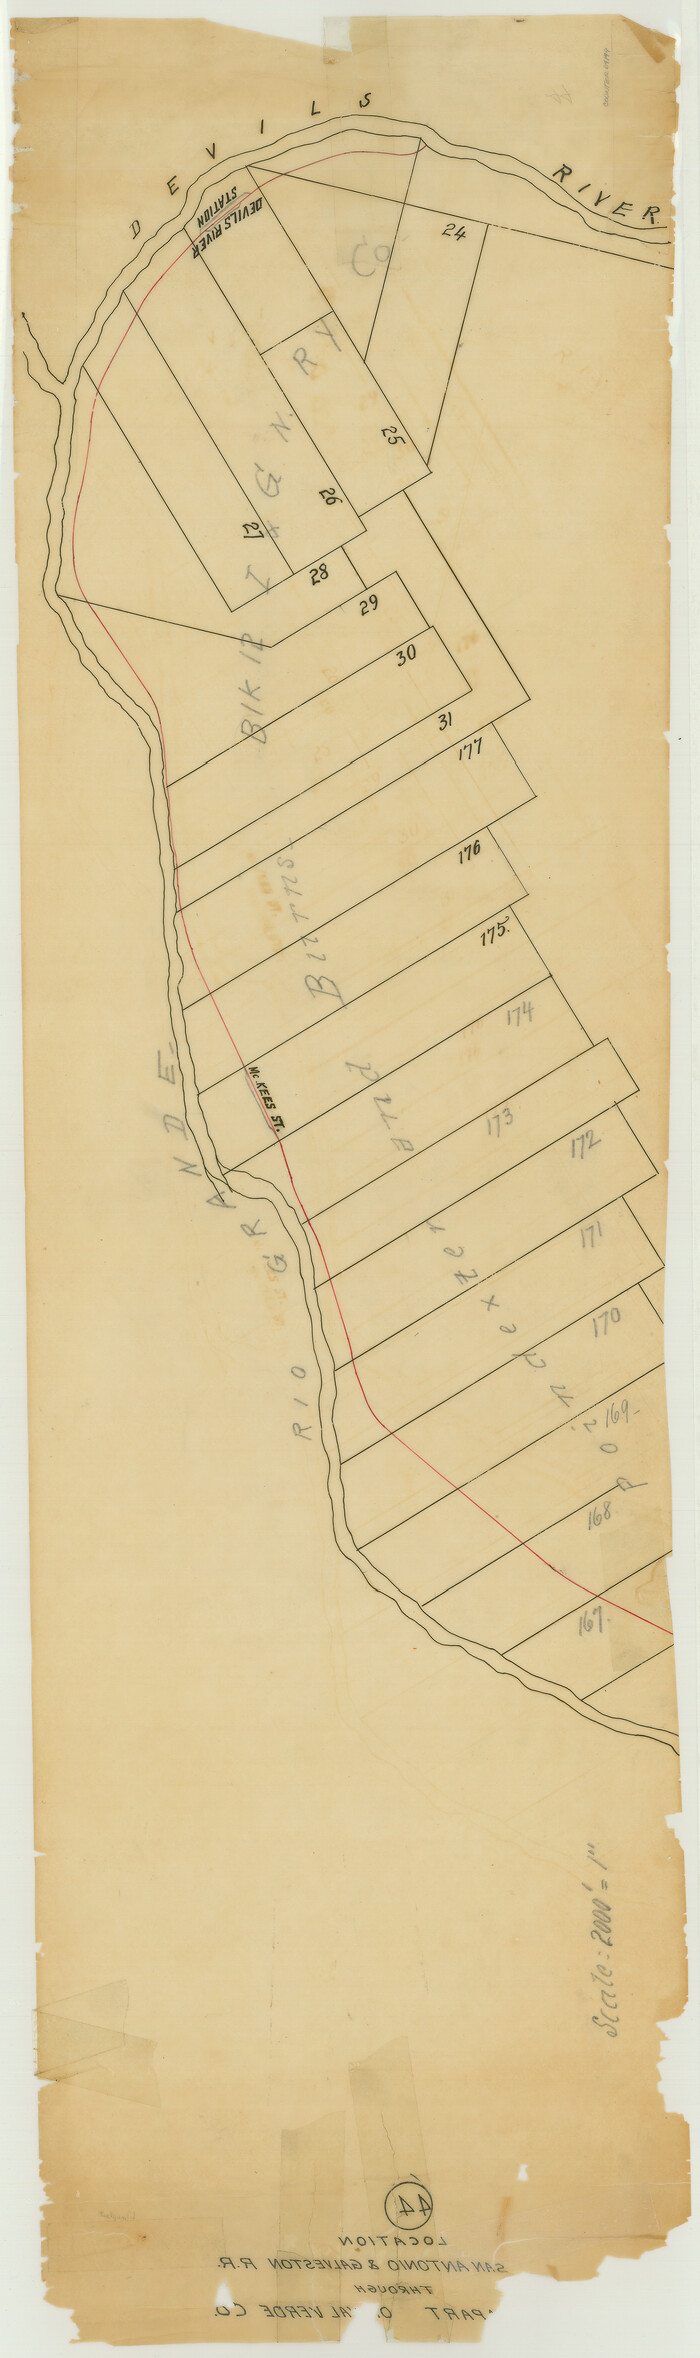 64149, [San Antonio & Galveston RR], General Map Collection